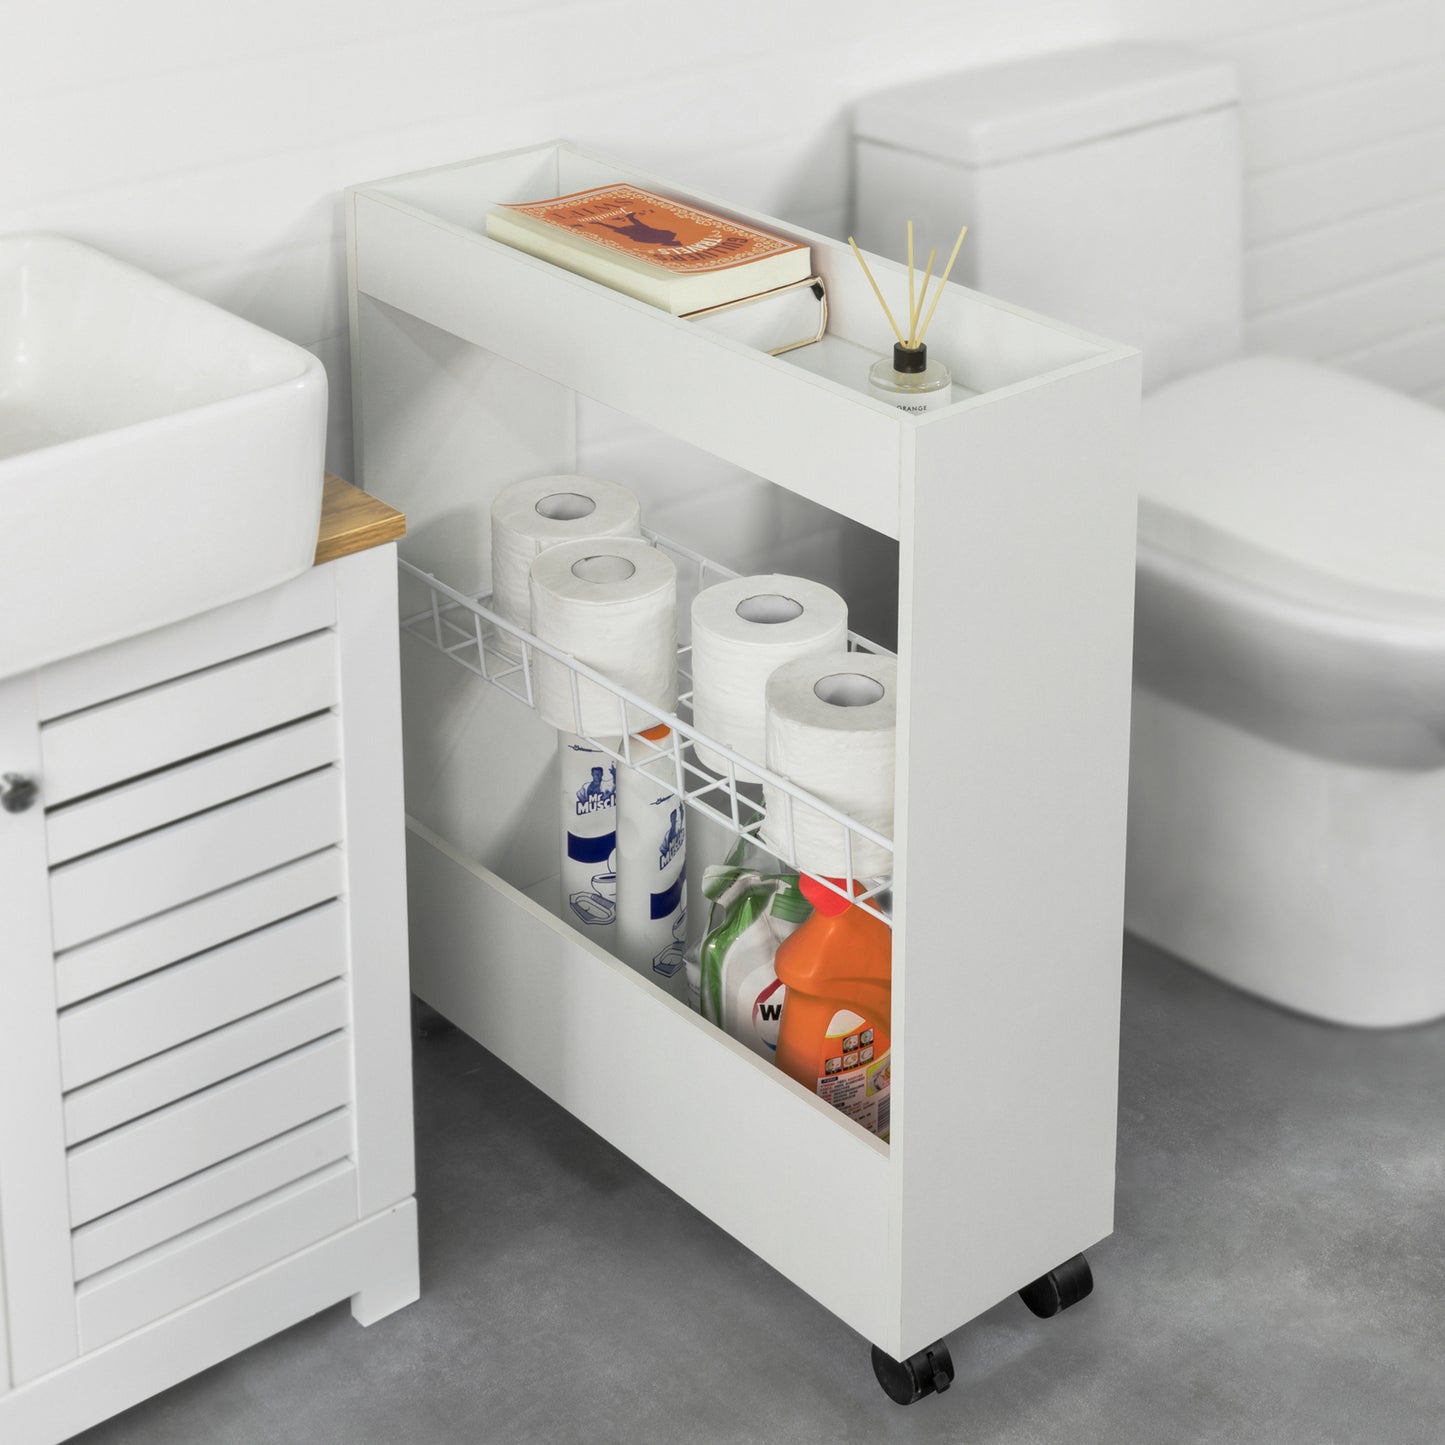 SoBuy Bathroom Toilet Paper Roll Holder, Narrow Bathroom Shelf on Wheels, 3 Tiers Mobile Storage Shelf Rack